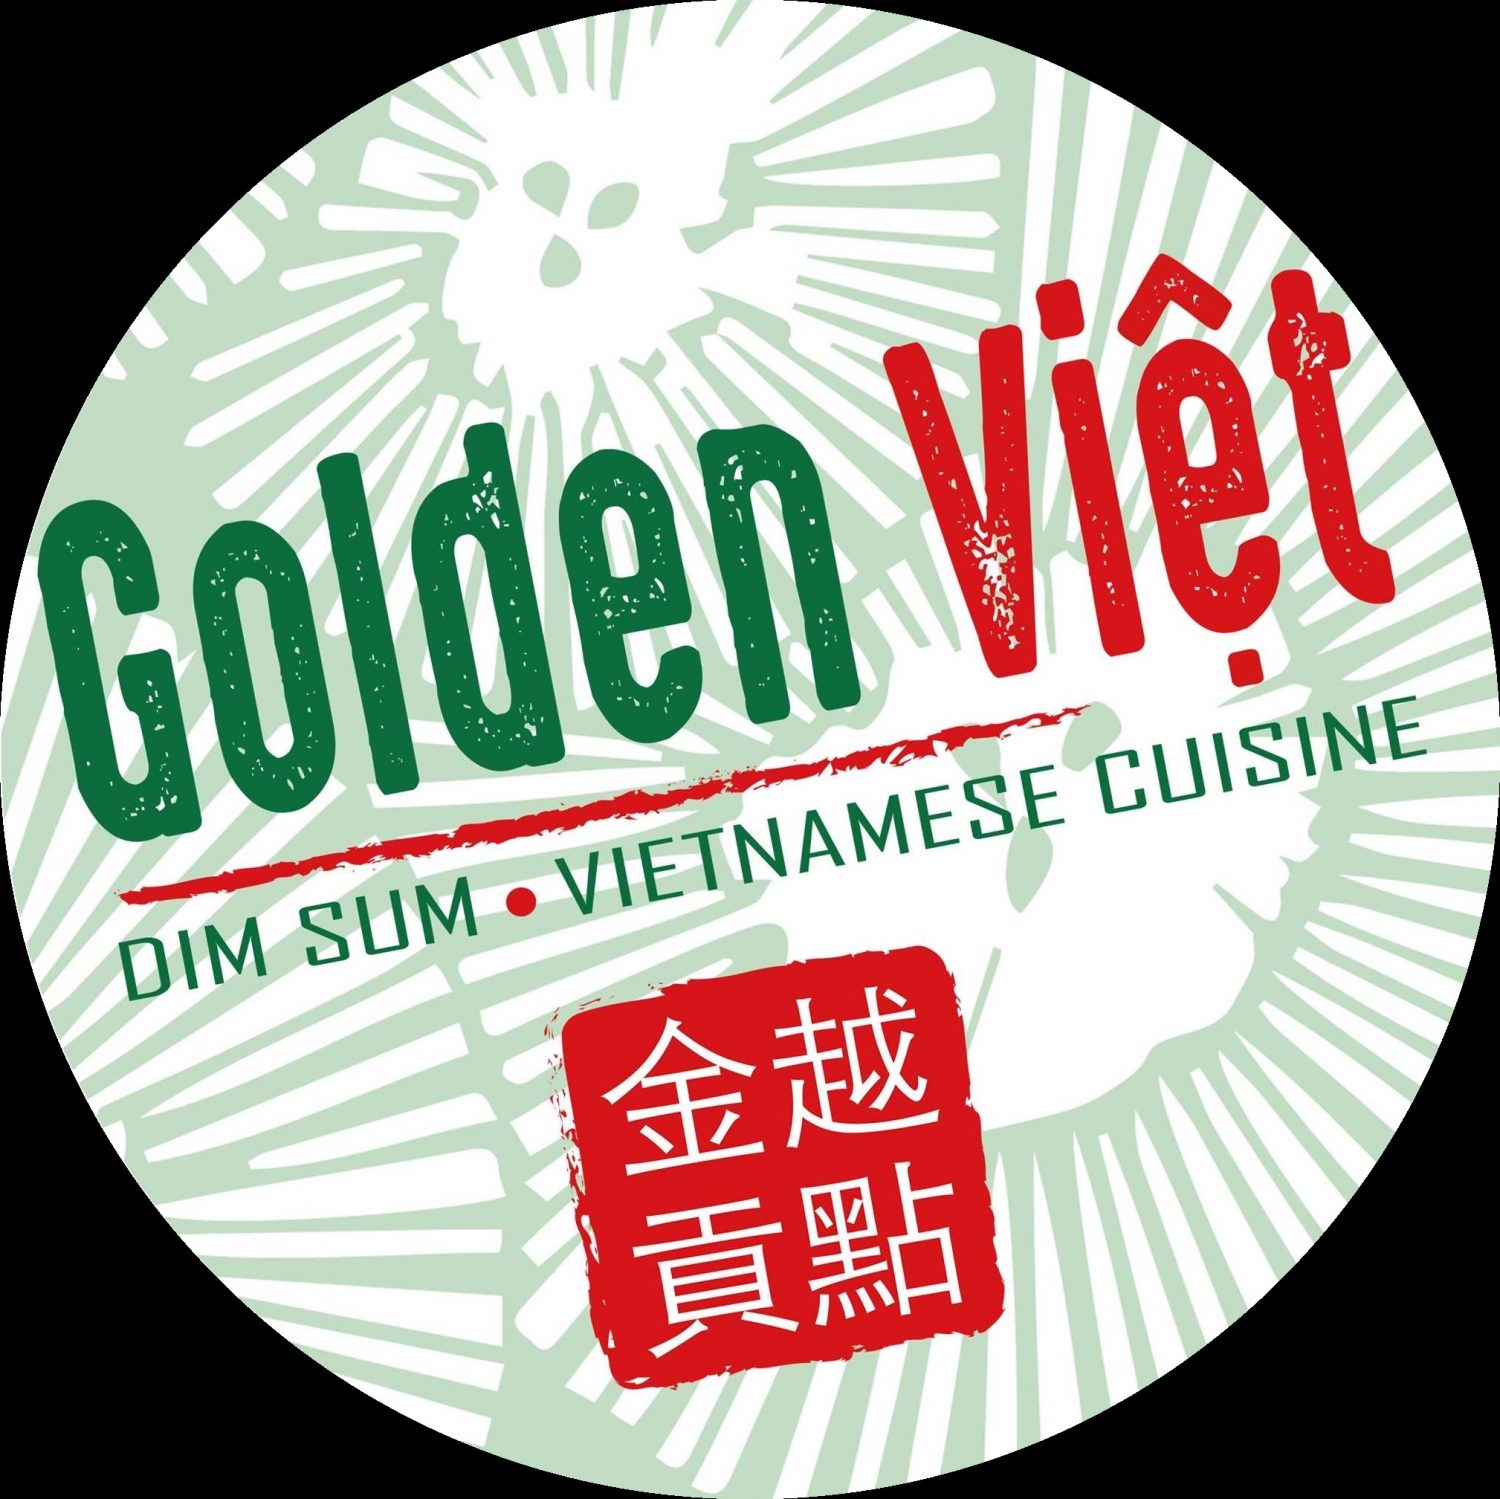 Golden Viet